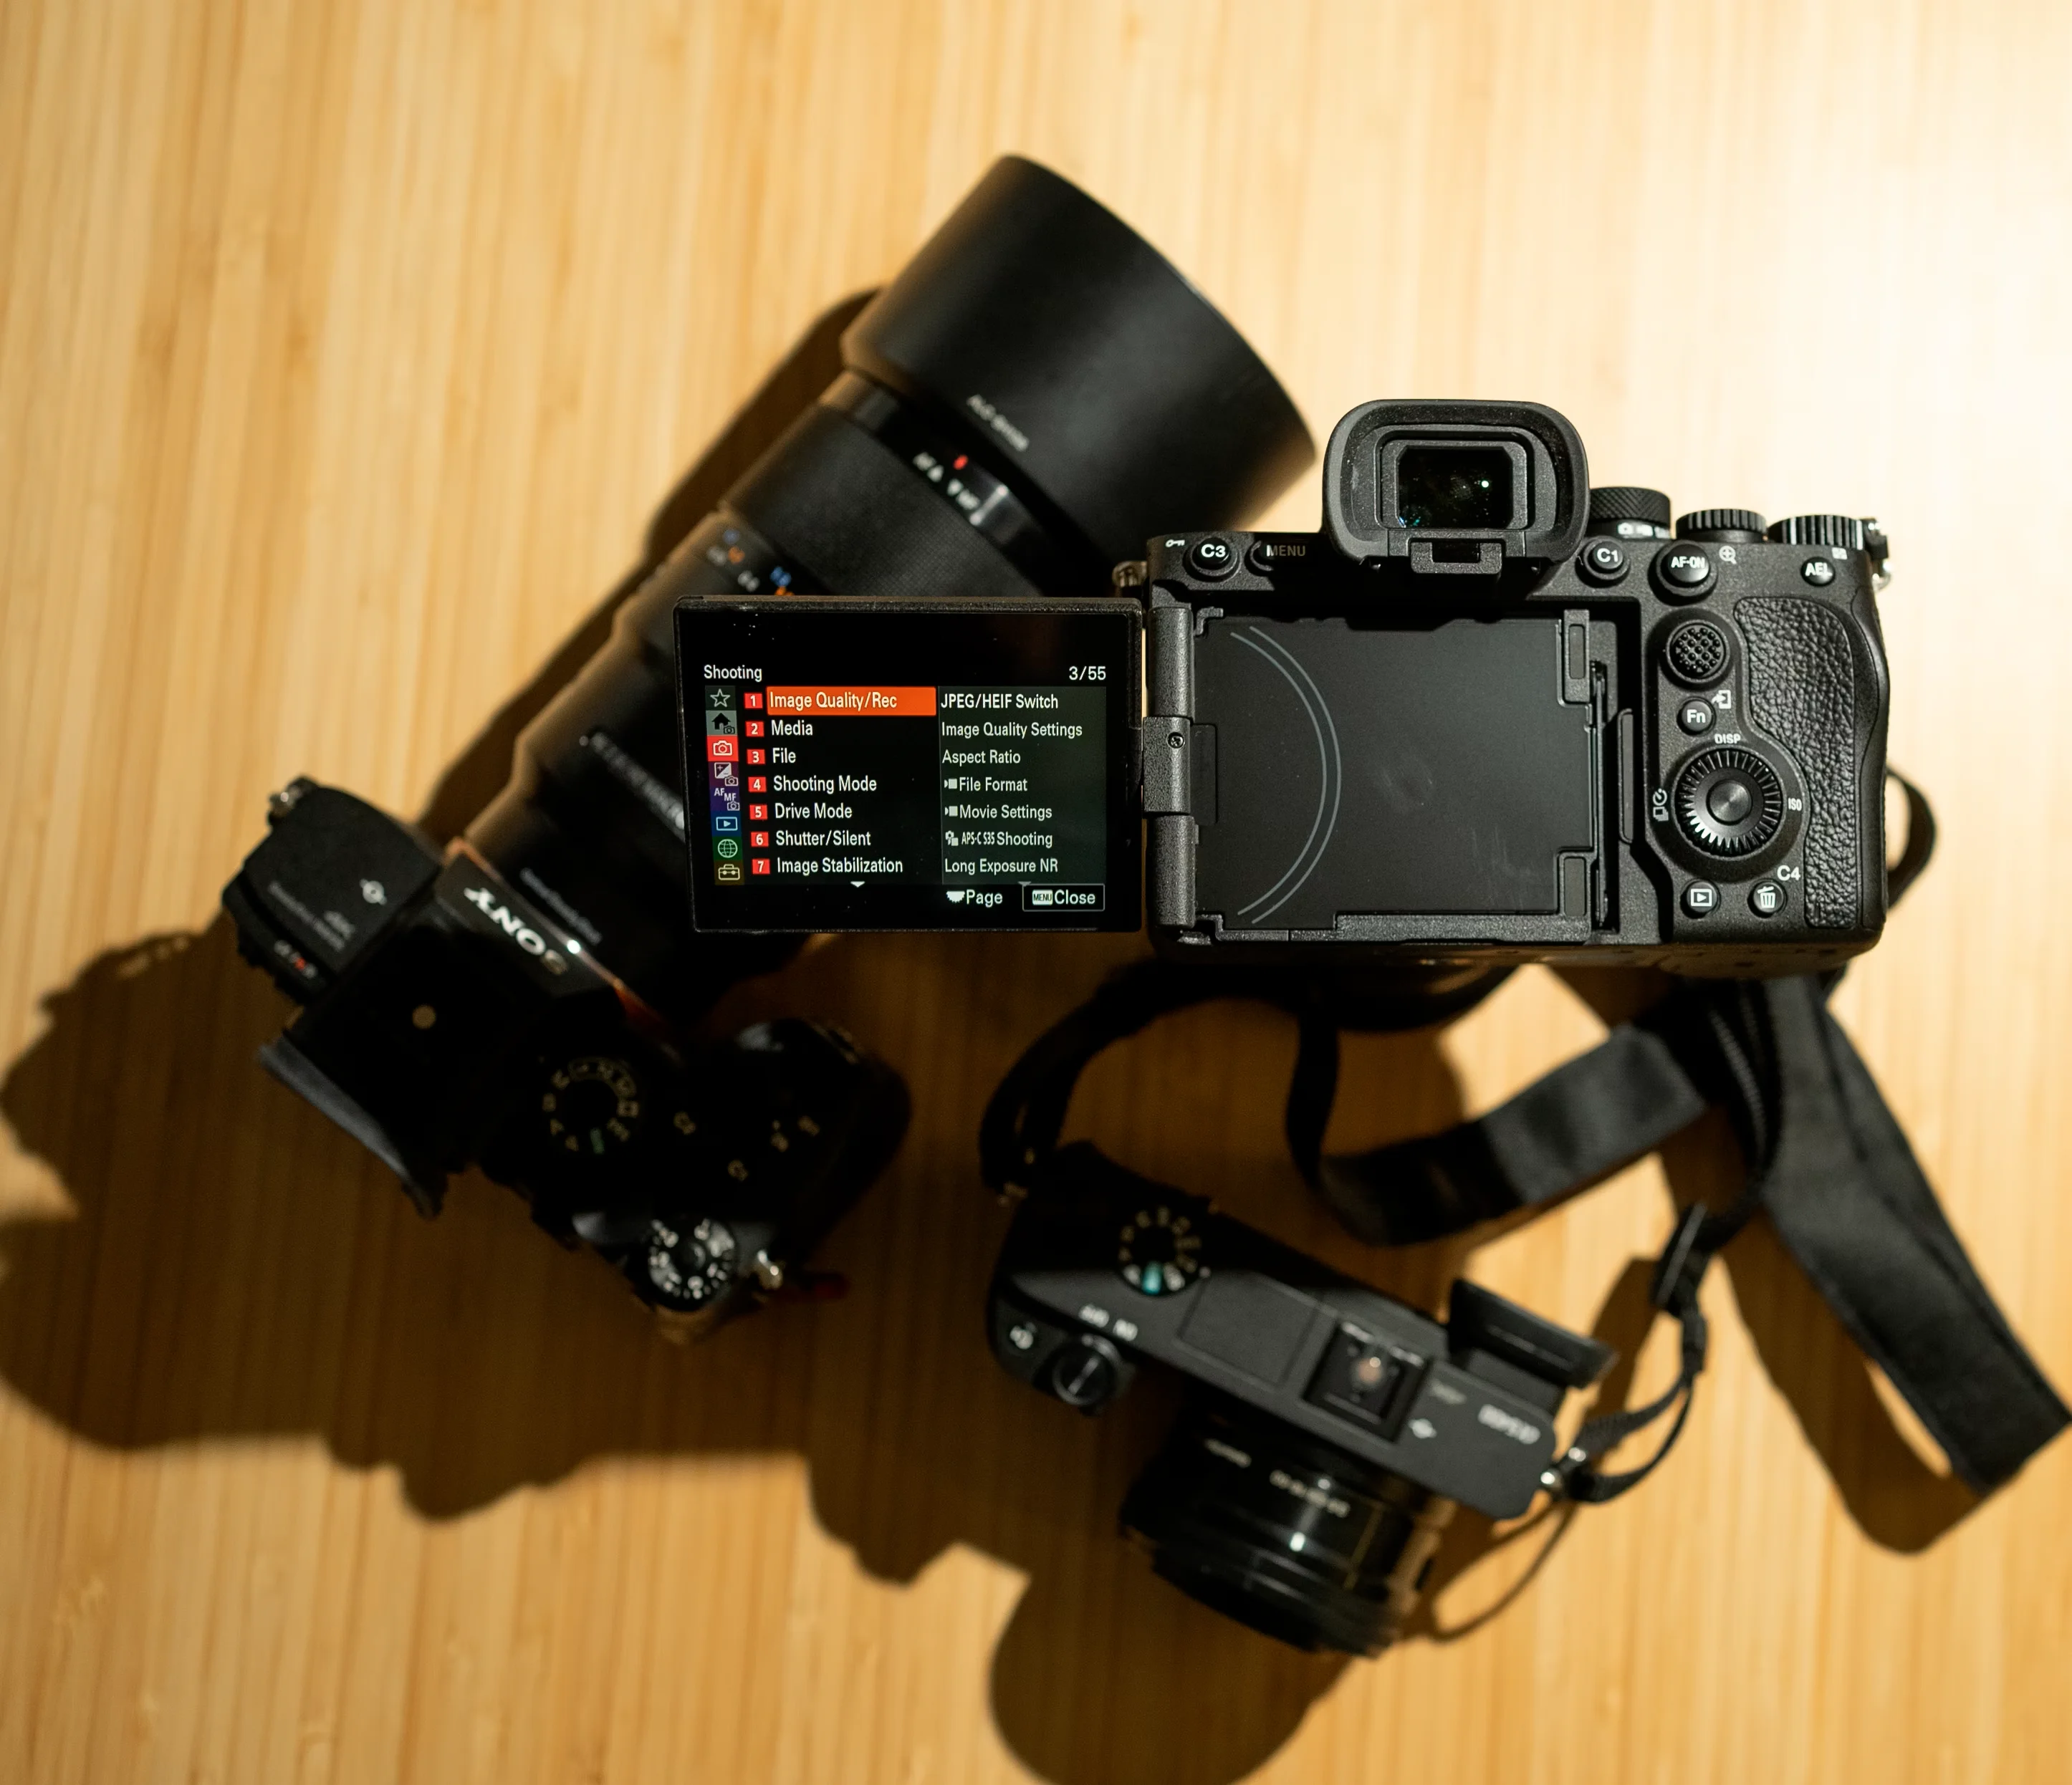 Sony RX10 IV - Sports Photography Camera Settings.mp4 on Vimeo